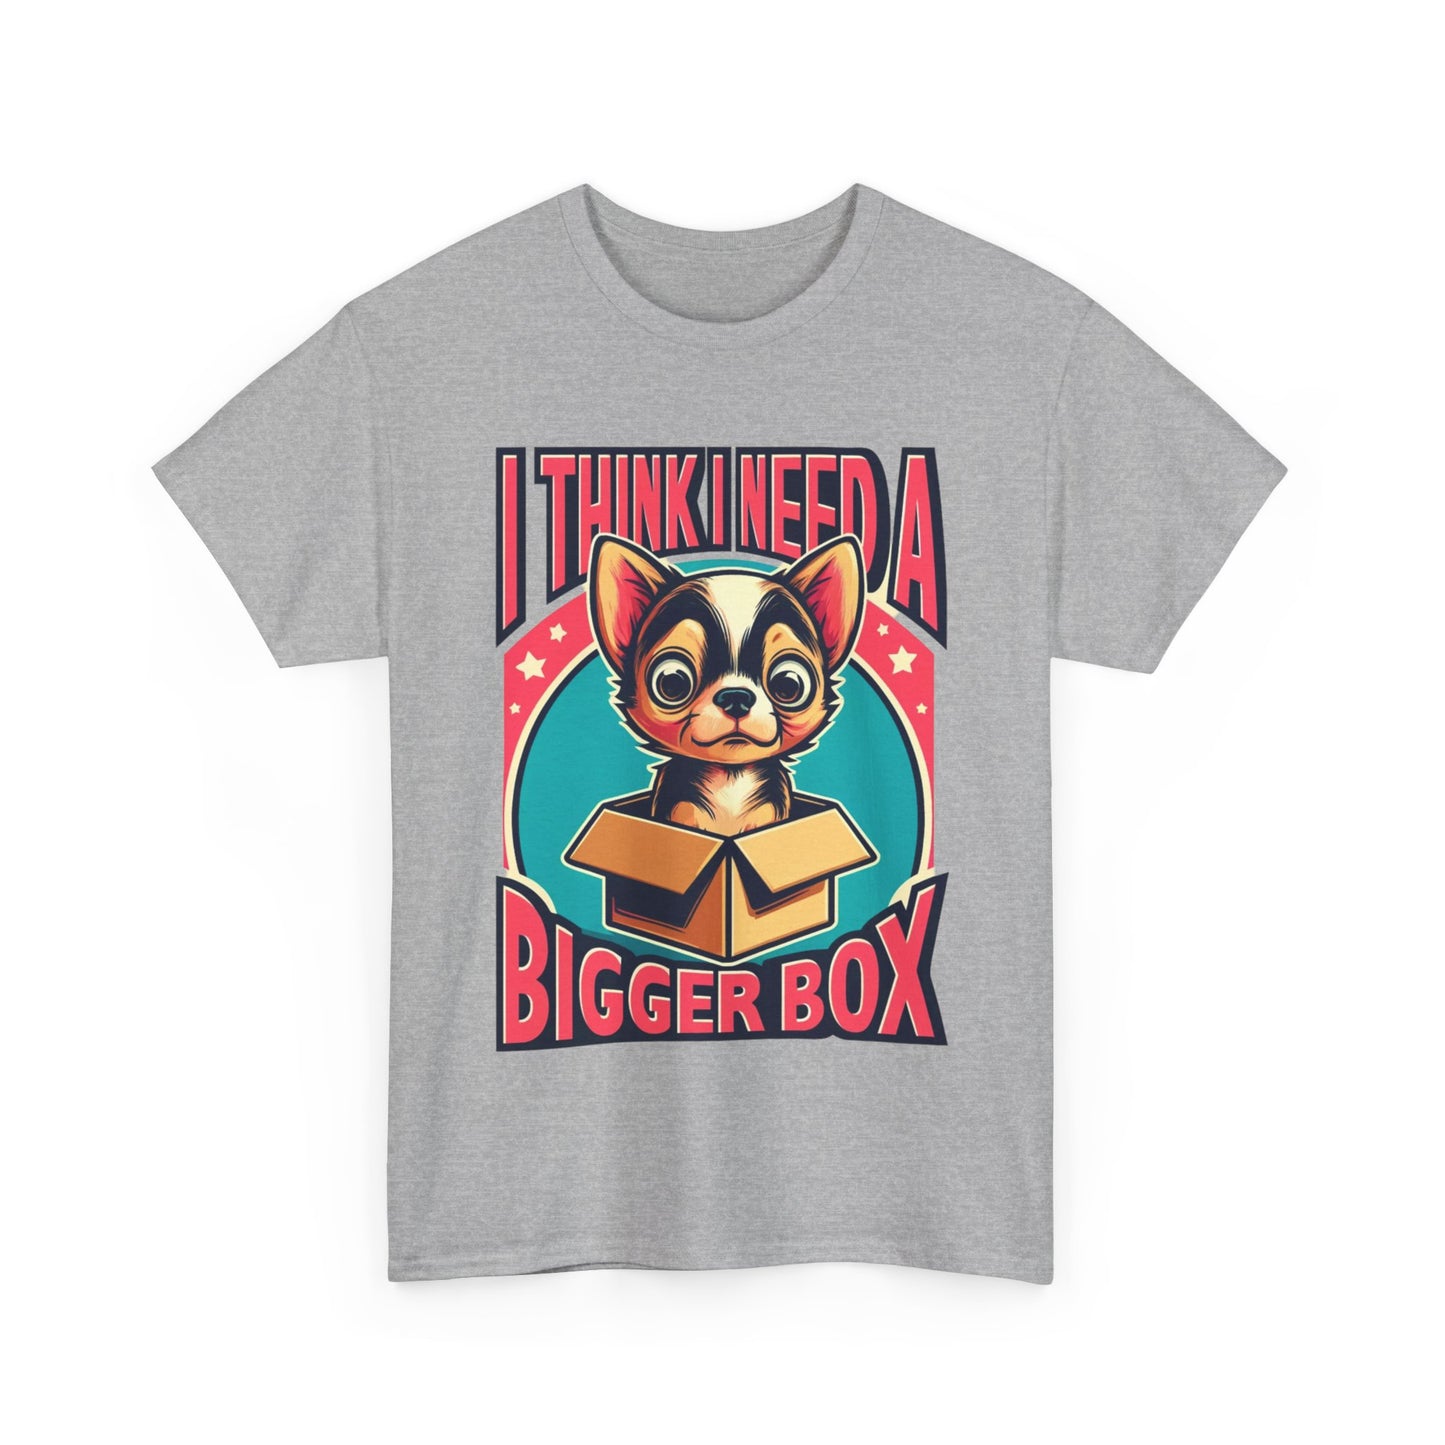 Y.M.L.Y. "I Think I Need A Bigger Box" Chihuahua T-Shirts Chihuahua Lover T-Shirts Funny Chihuahua T-Shirts